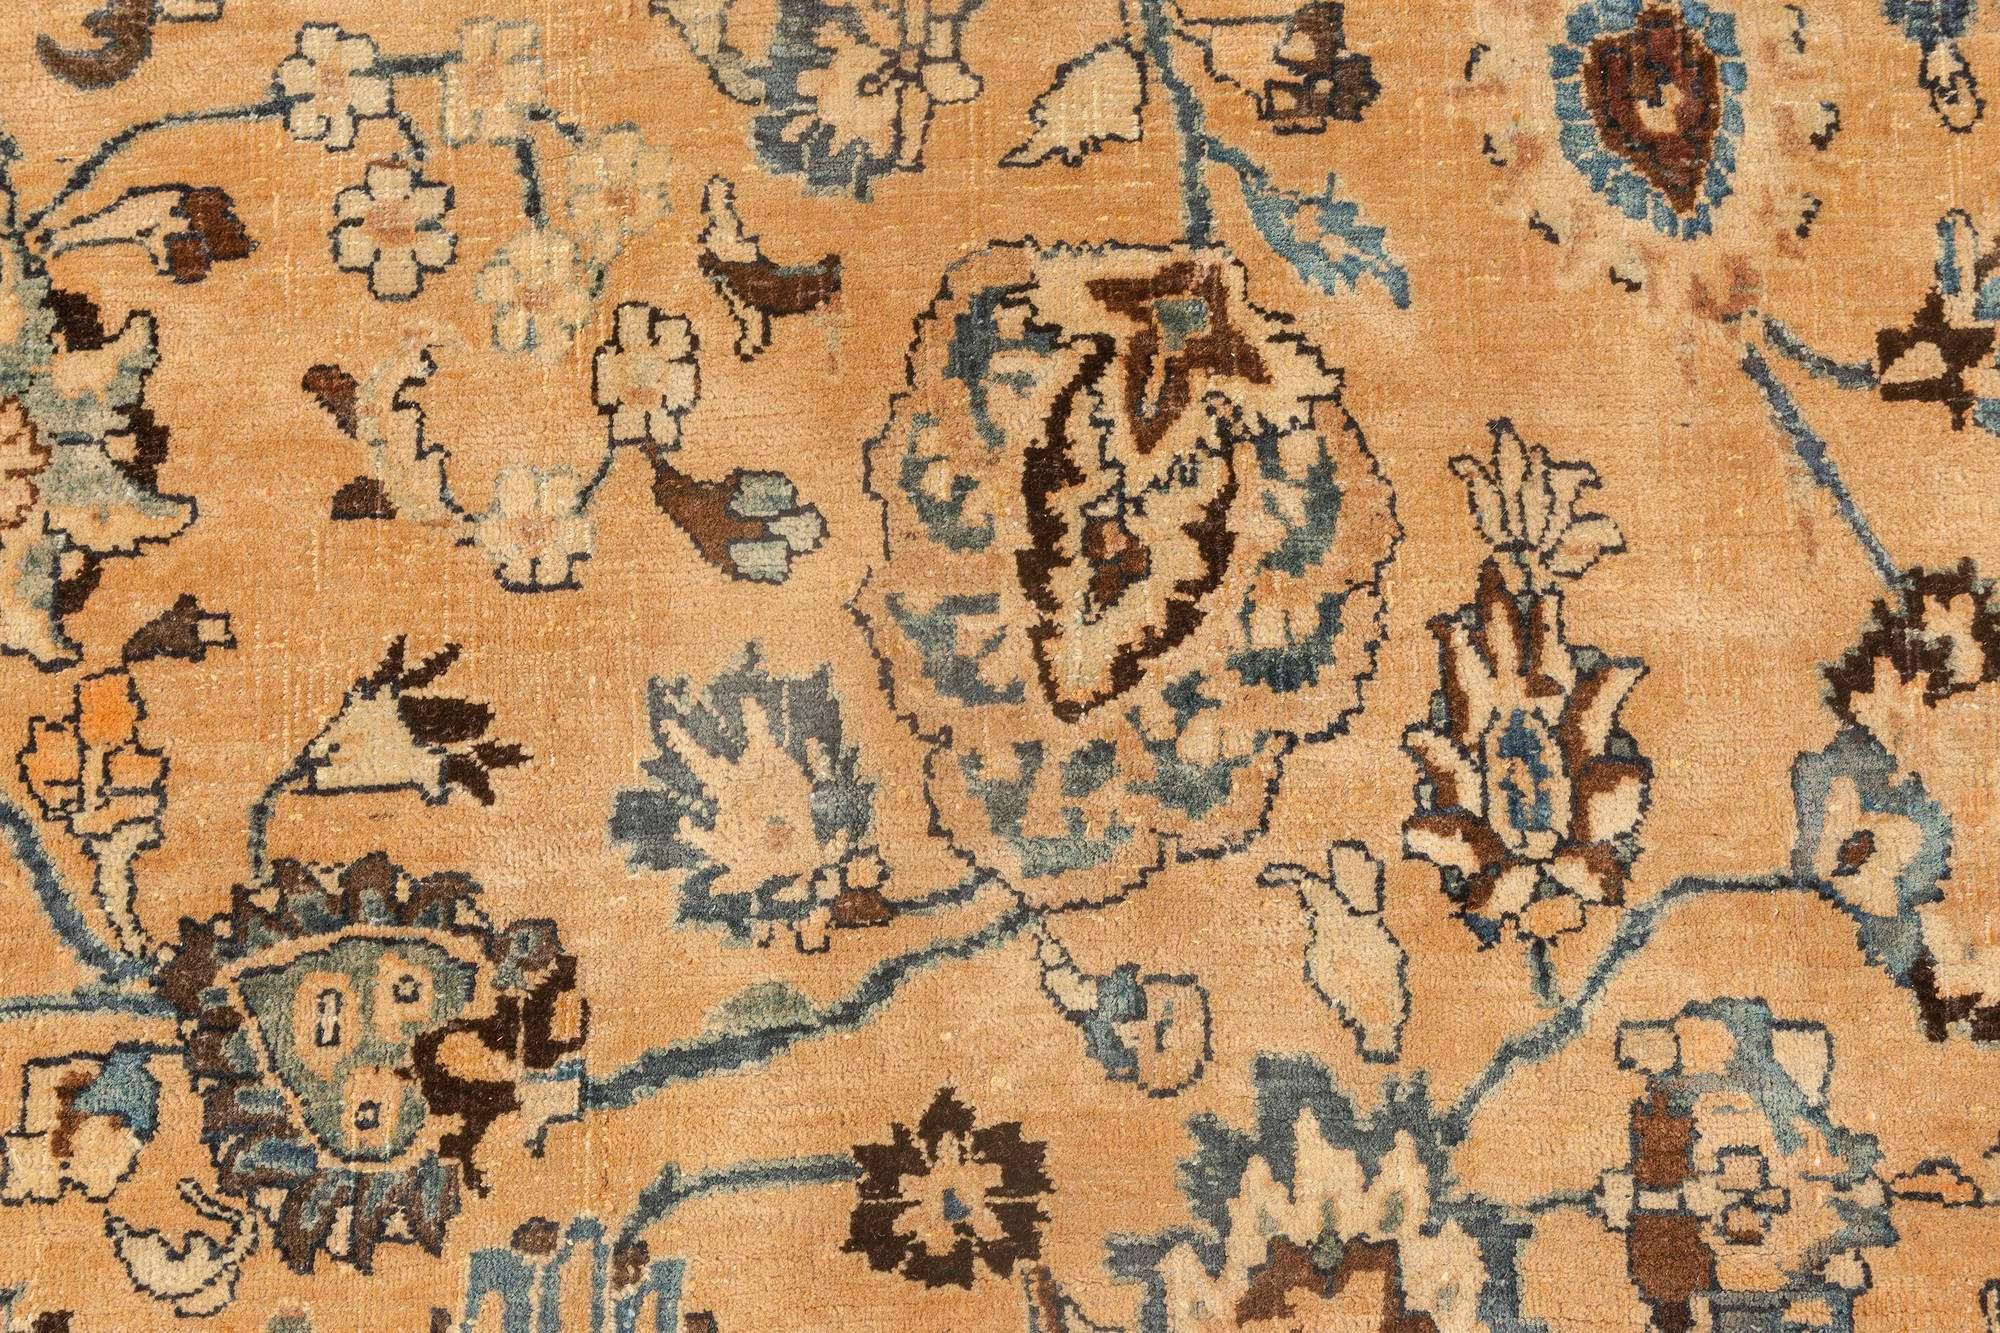 Antique Persian Meshad Blue, Beige, Brown Handmade Wool Rug
Size: 12'4